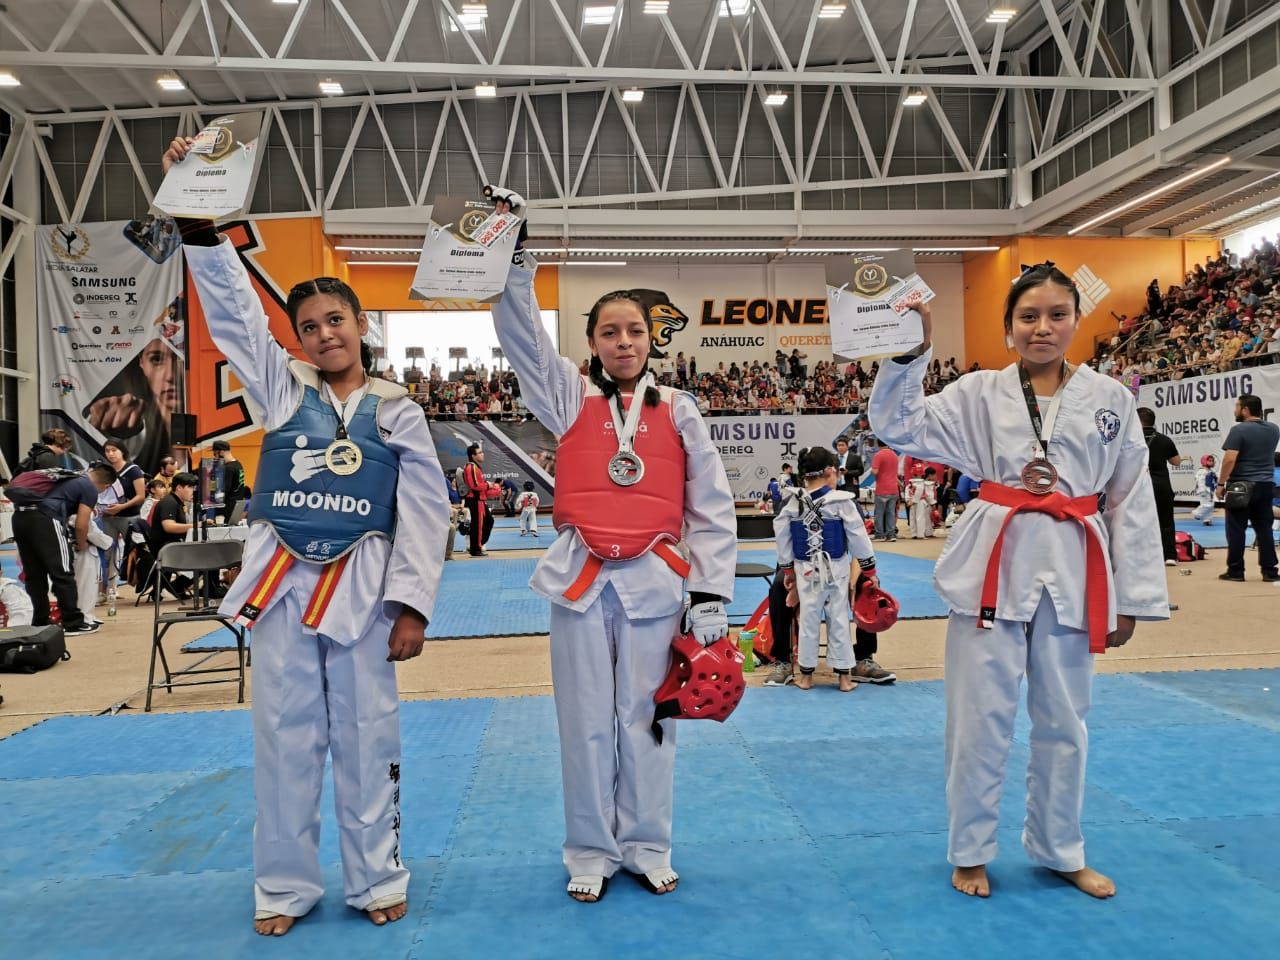 Destaca Escuela Técnico Deportiva Municipal de Mineral de la Reforma en torneo abierto de Taekwondo "Iridia Salazar"